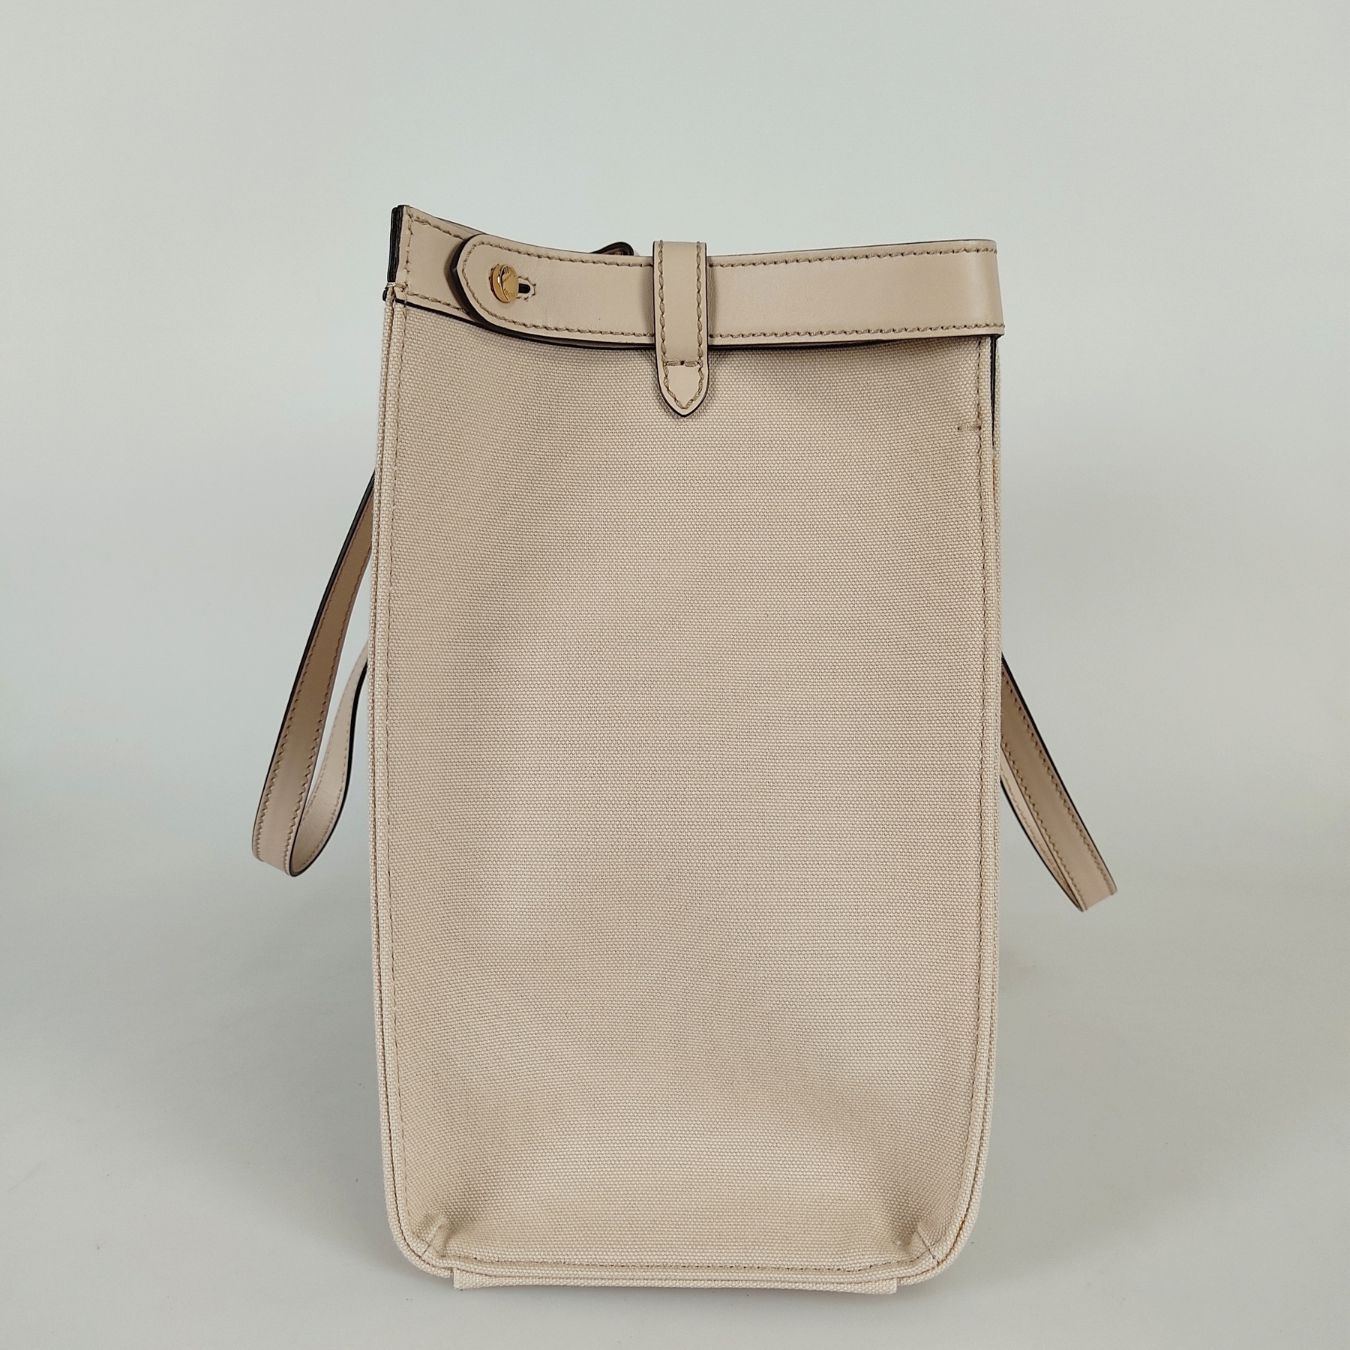 Fendi Fendi Peekaboo Tote Medium Canvas shoulder bag pink - '10s